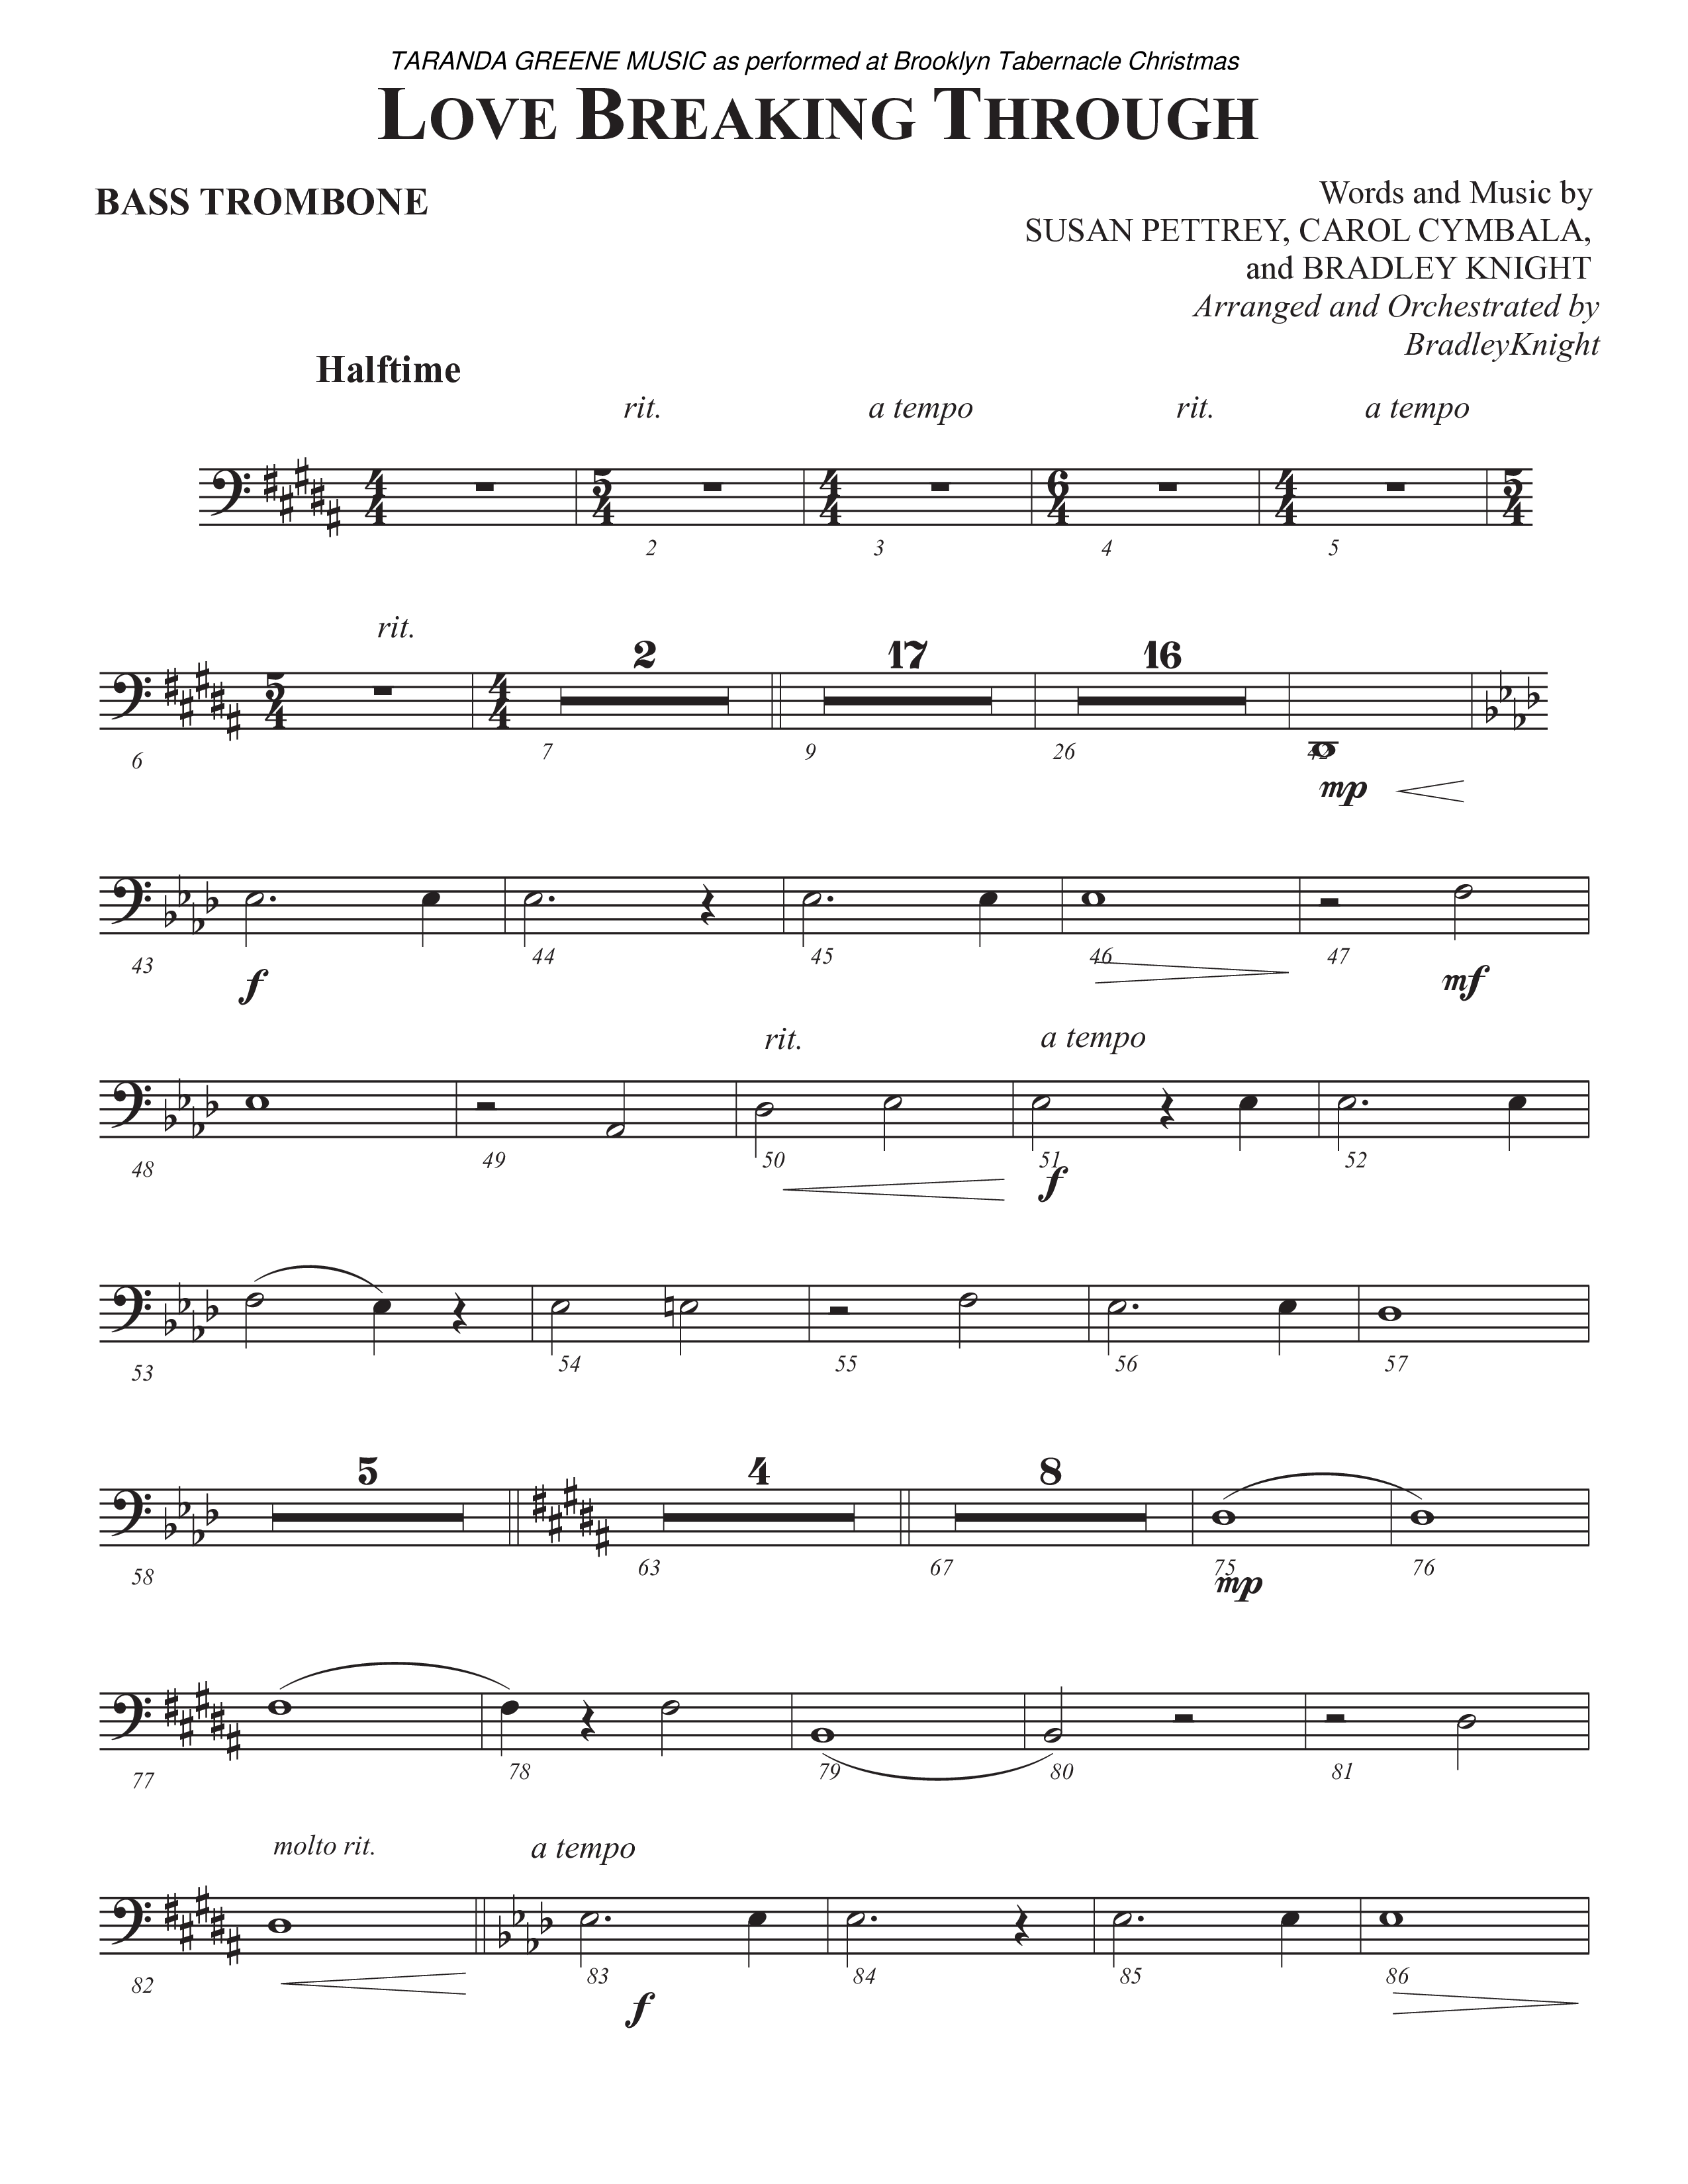 Love Breaking Through Bass Trombone (TaRanda Greene / Arr. Bradley Knight / The Brooklyn Tabernacle Choir)